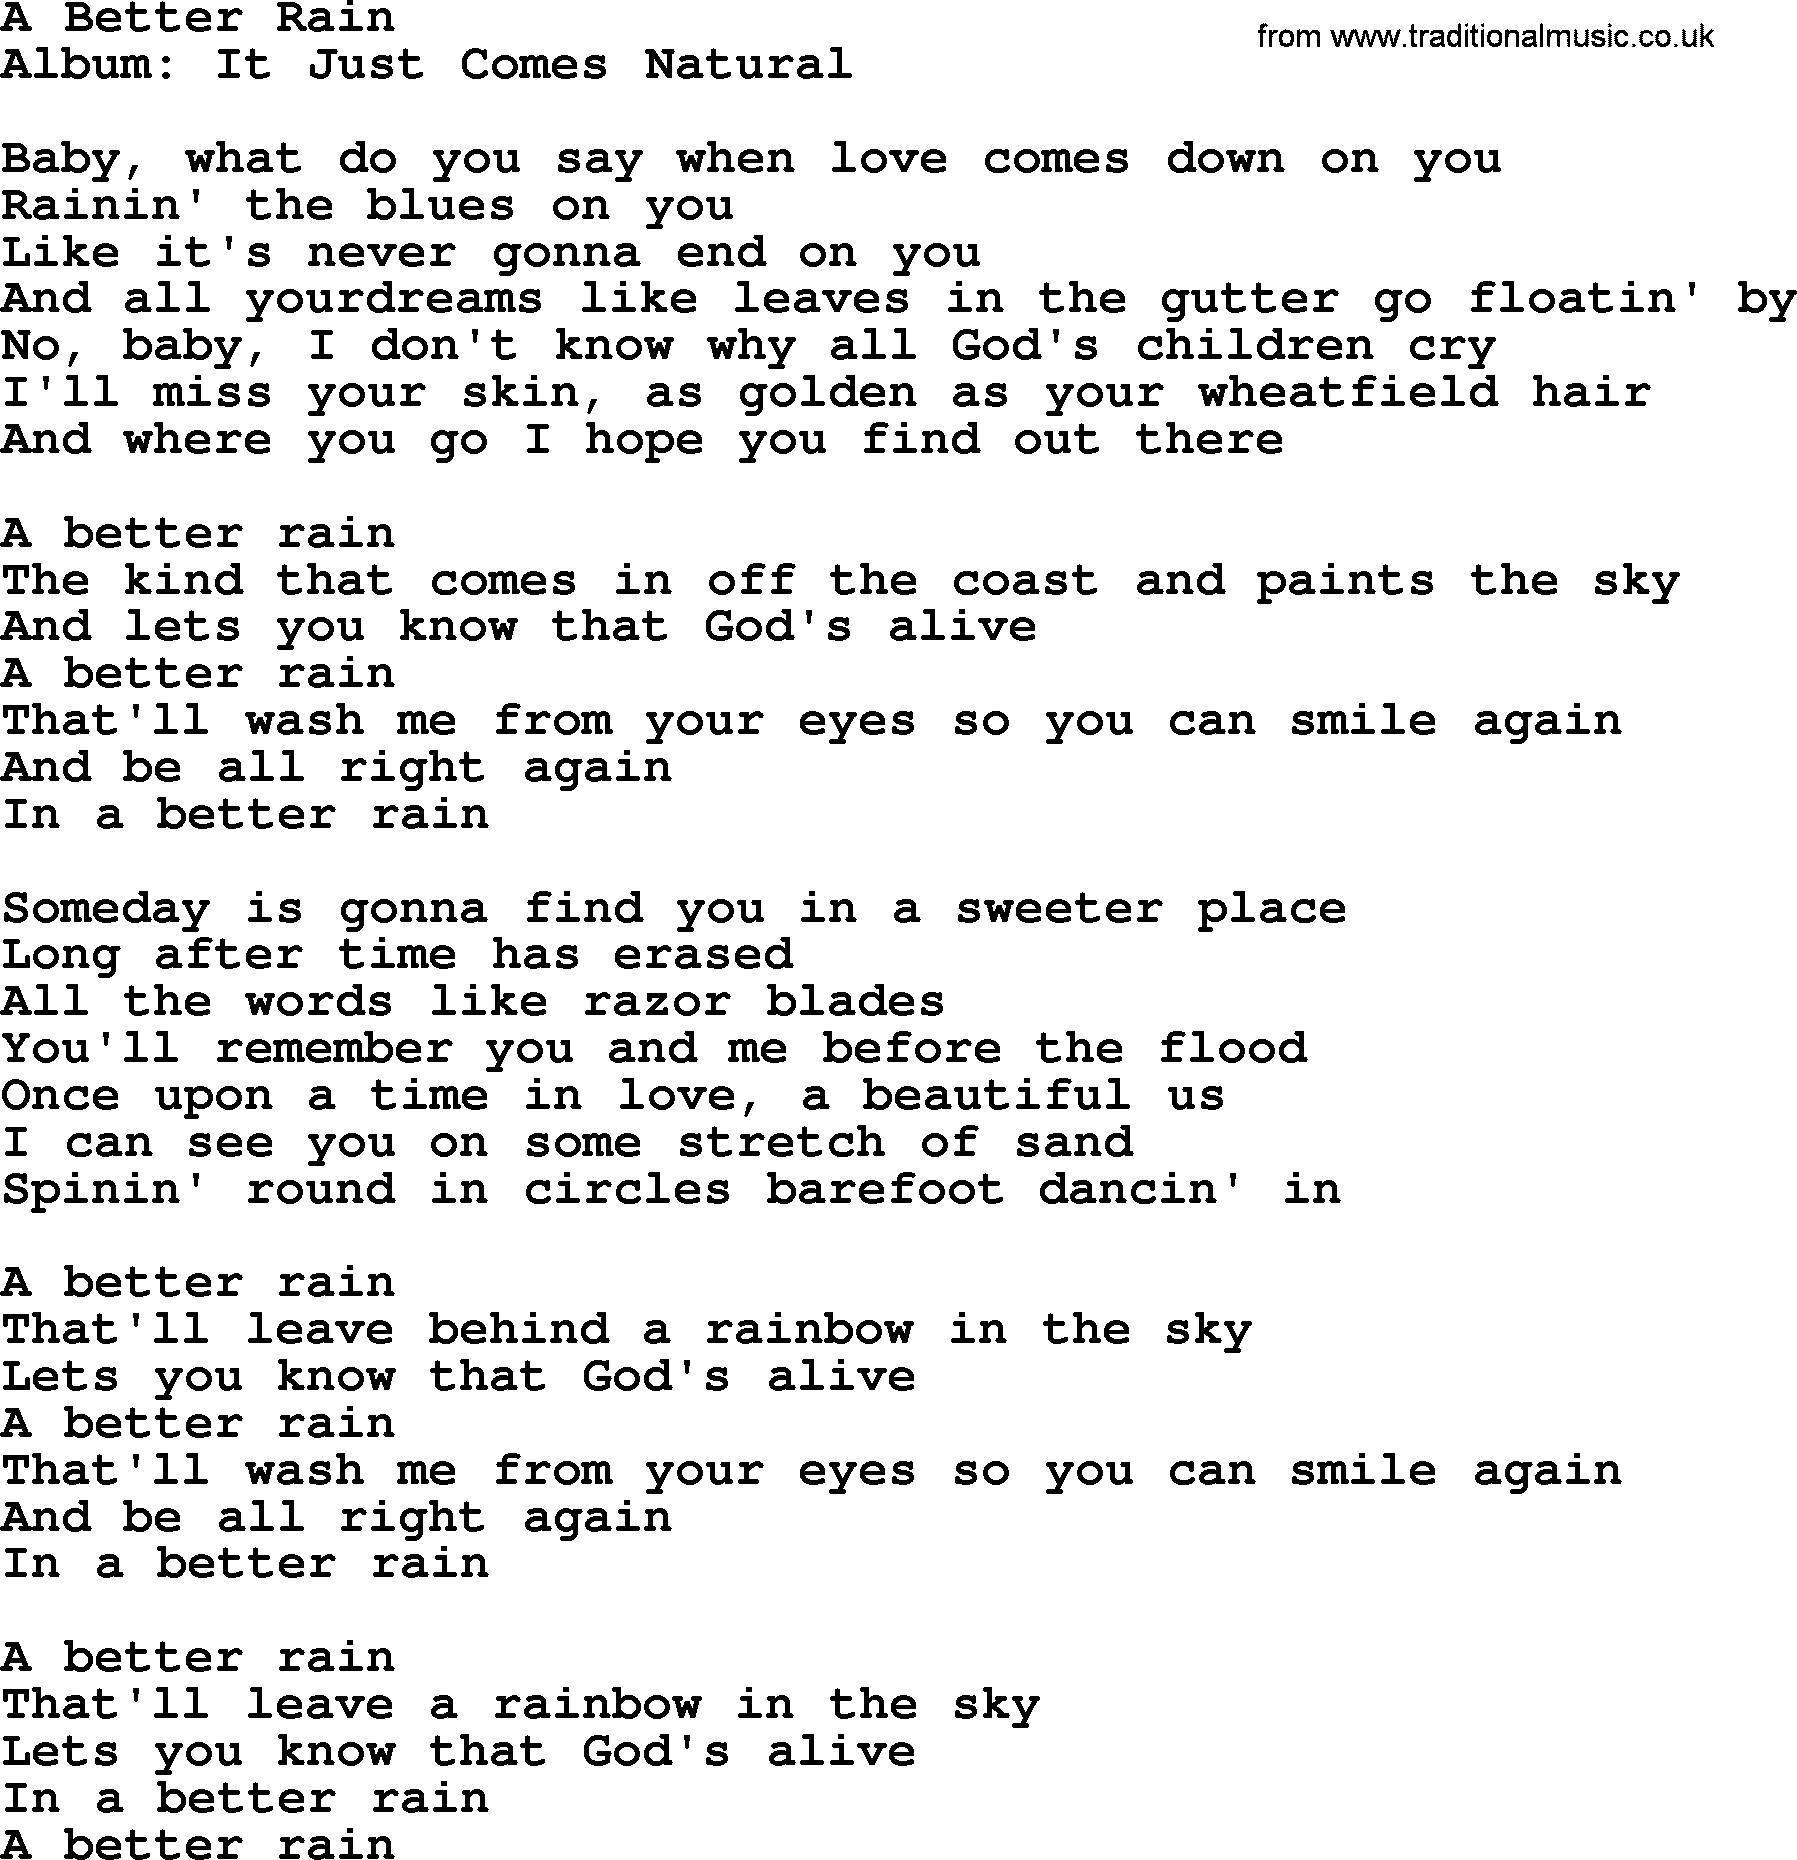 George Strait song: A Better Rain, lyrics